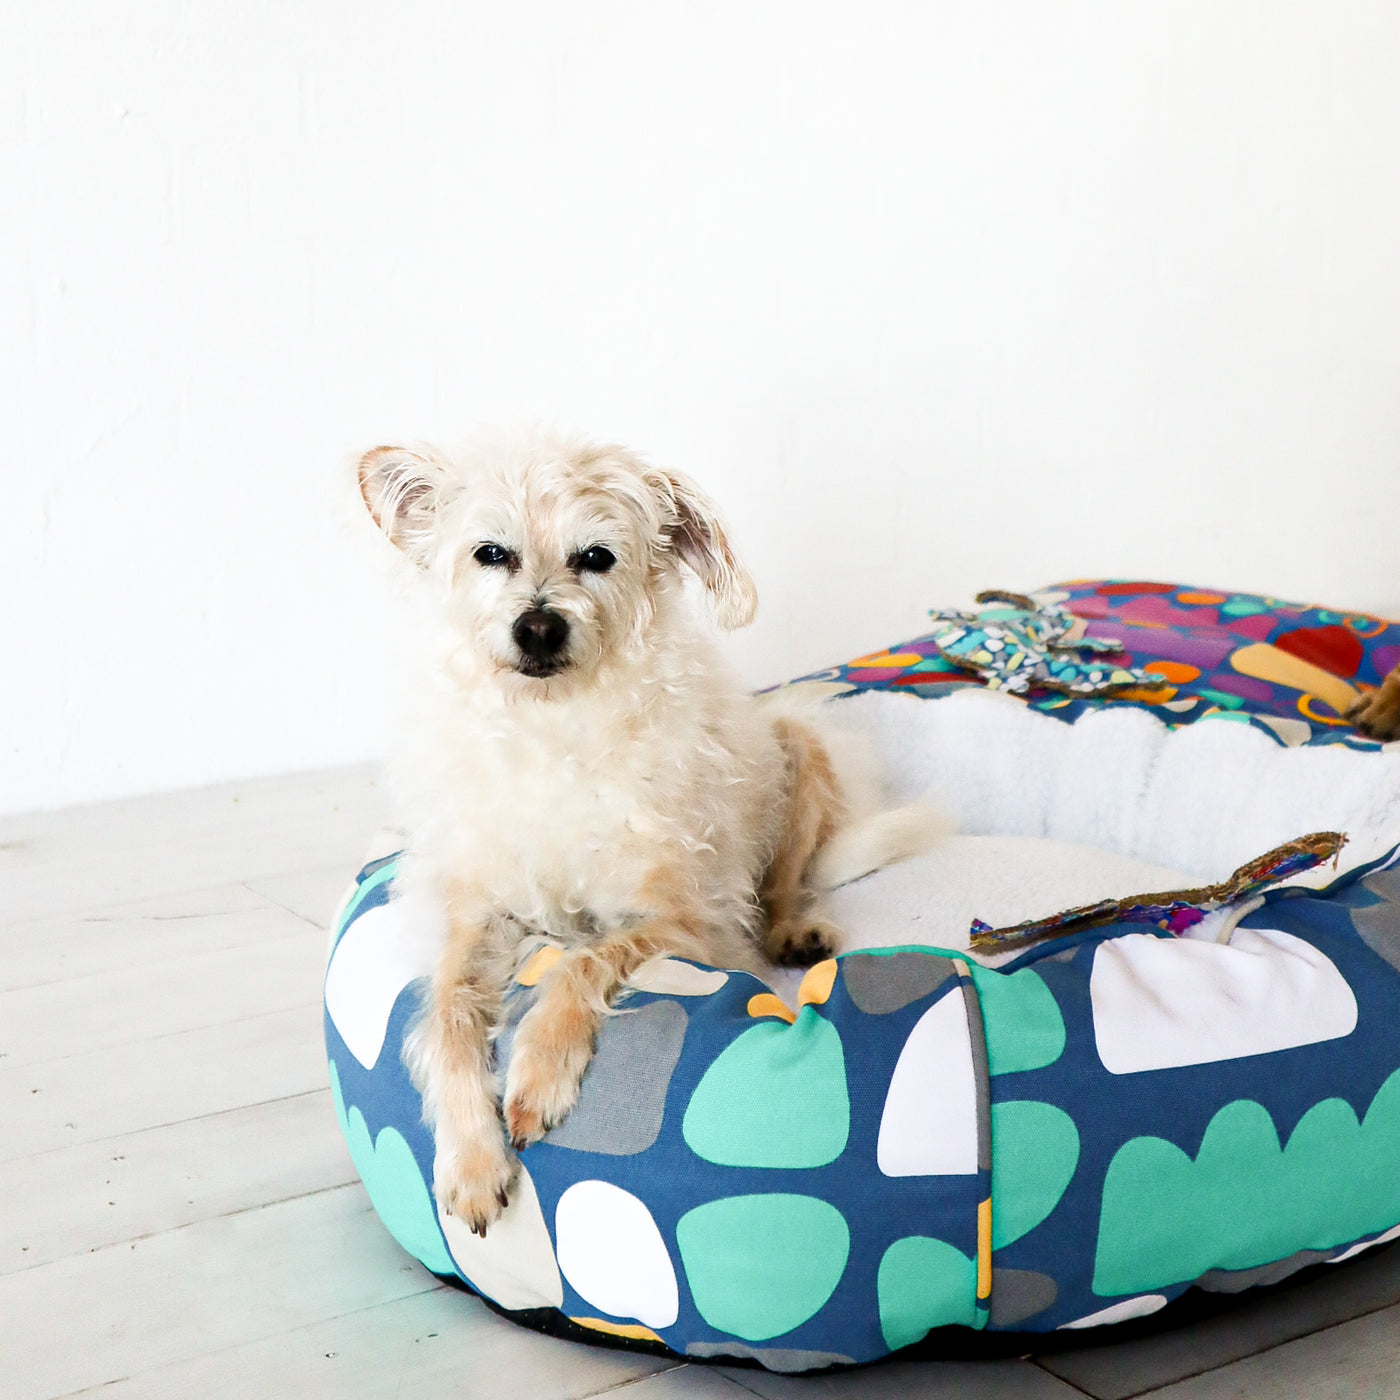 Fleecy Round Dog Bed - Puli Puli Blue